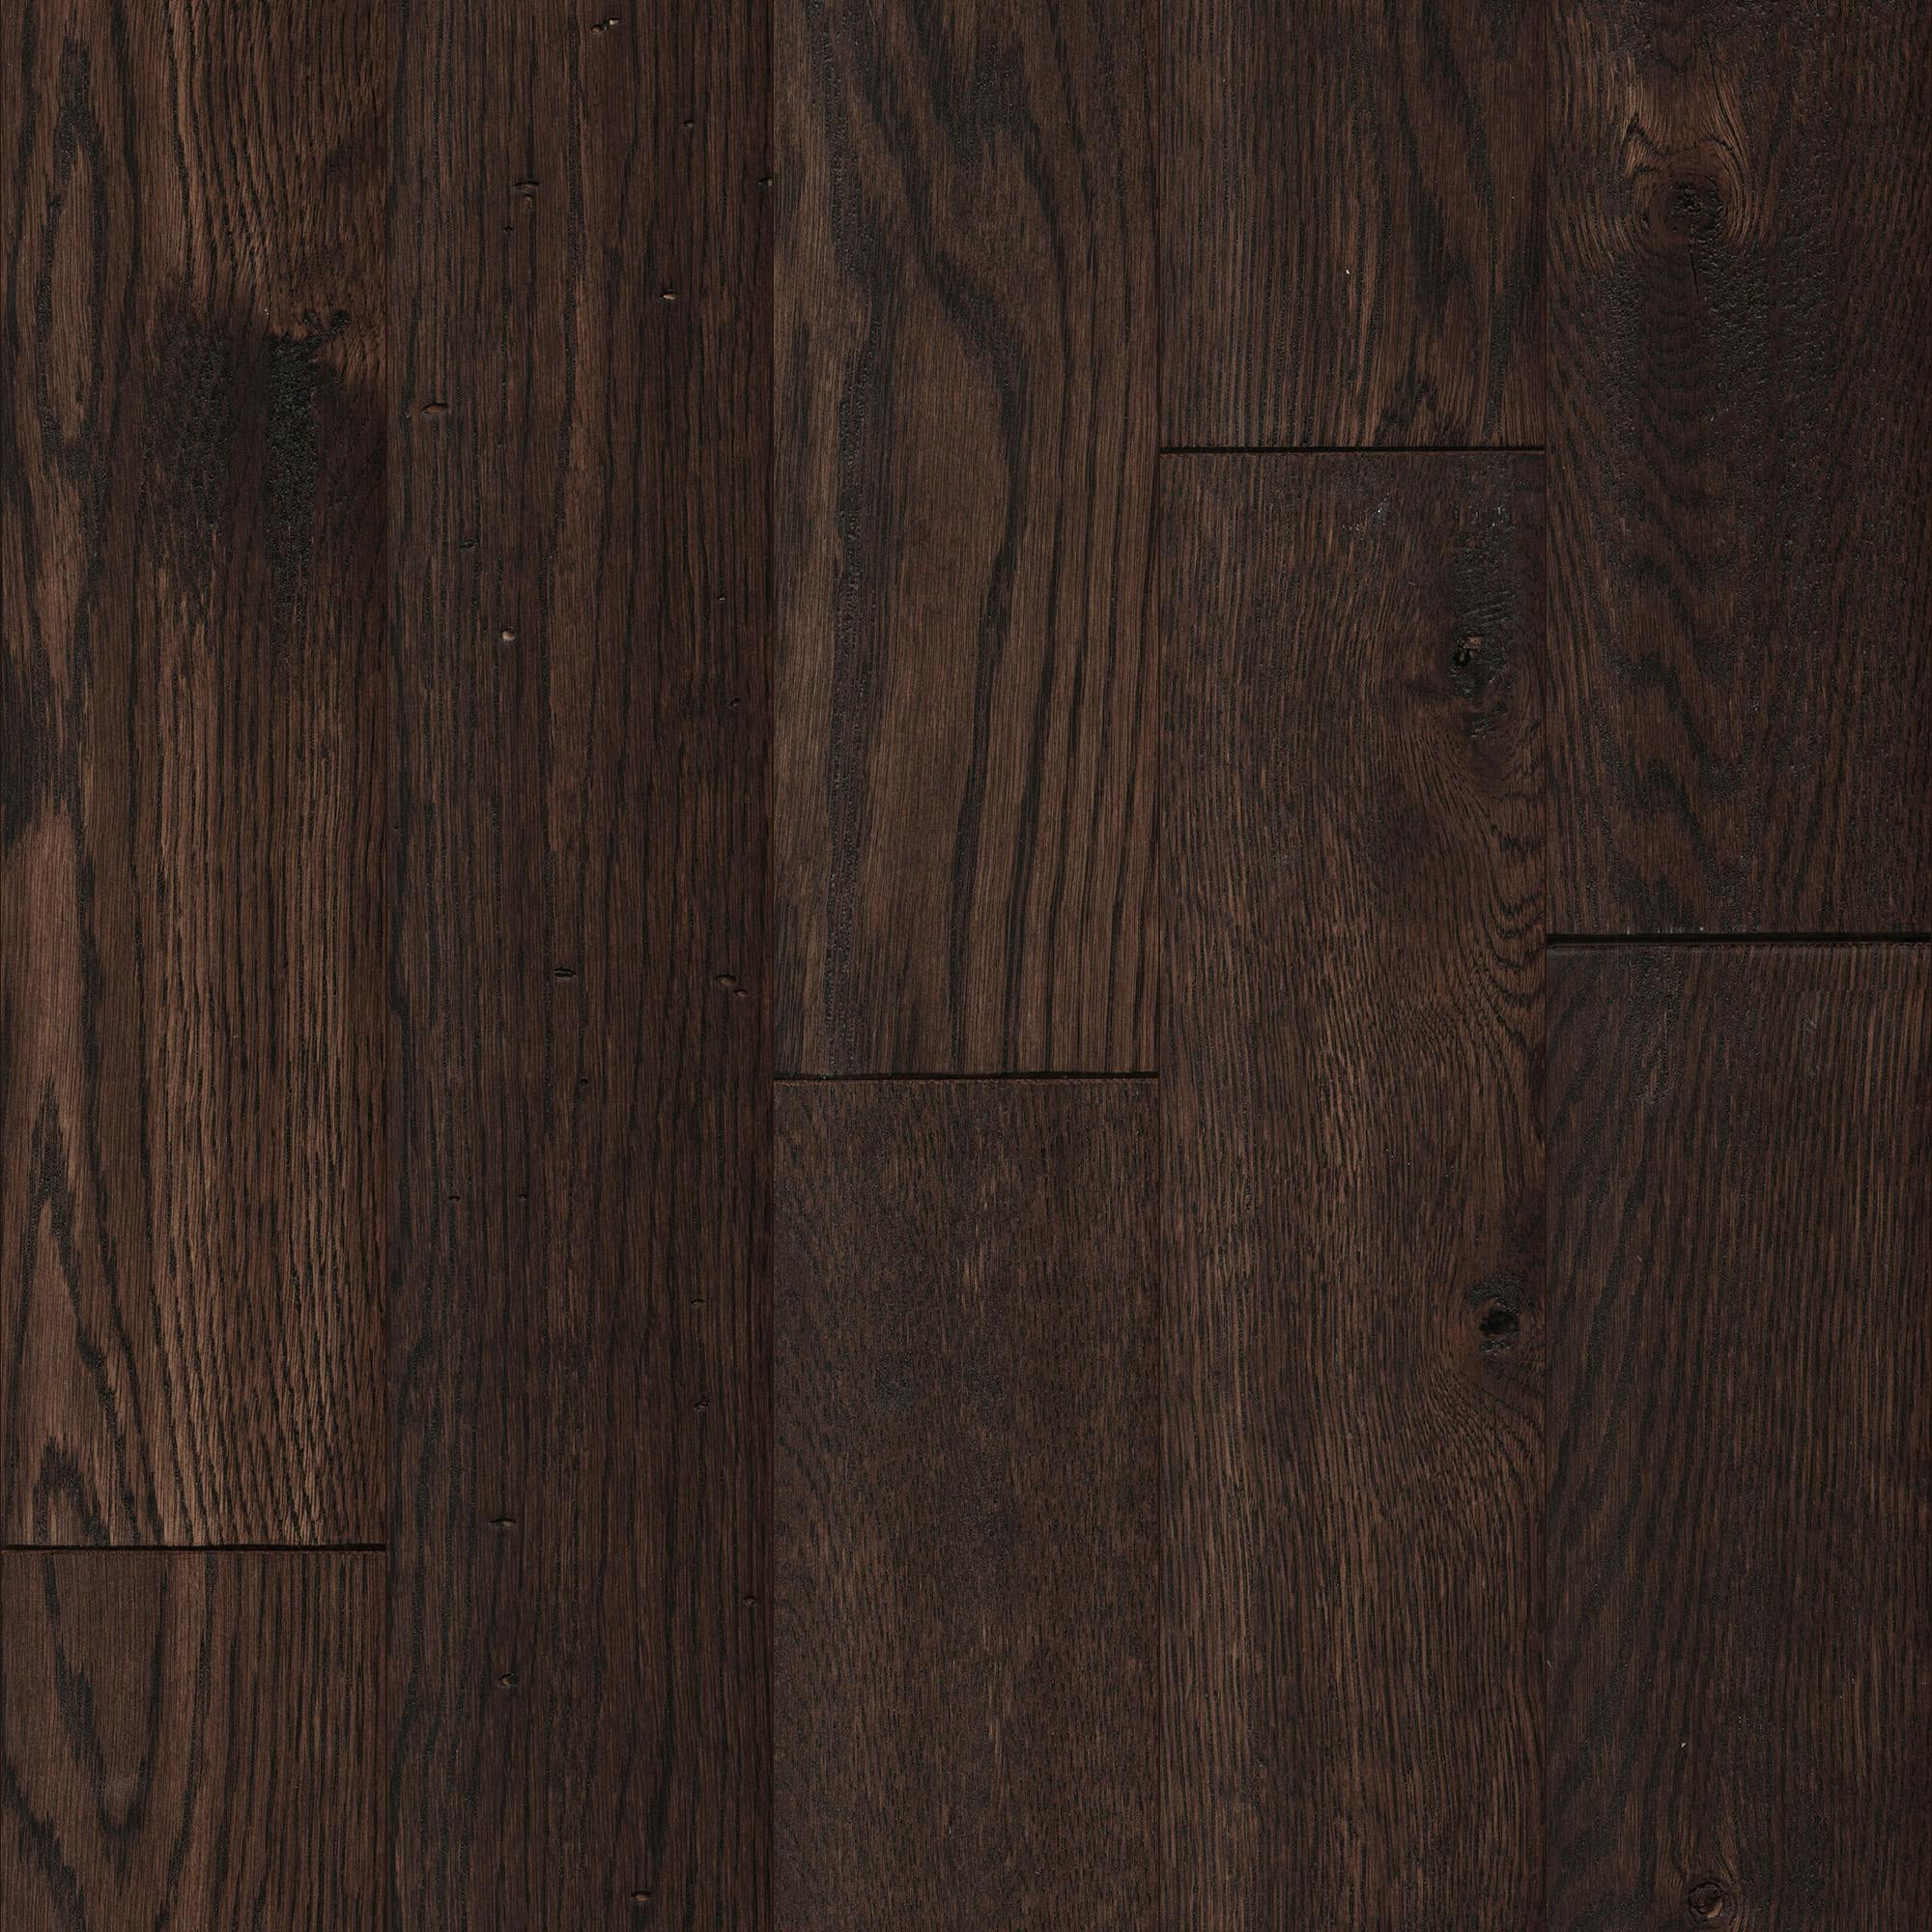 11 Wonderful Bruce Hardwood Flooring butterscotch Color 2024 free download bruce hardwood flooring butterscotch color of mullican chatelaine oak ebony 4 wide solid hardwood flooring with more views